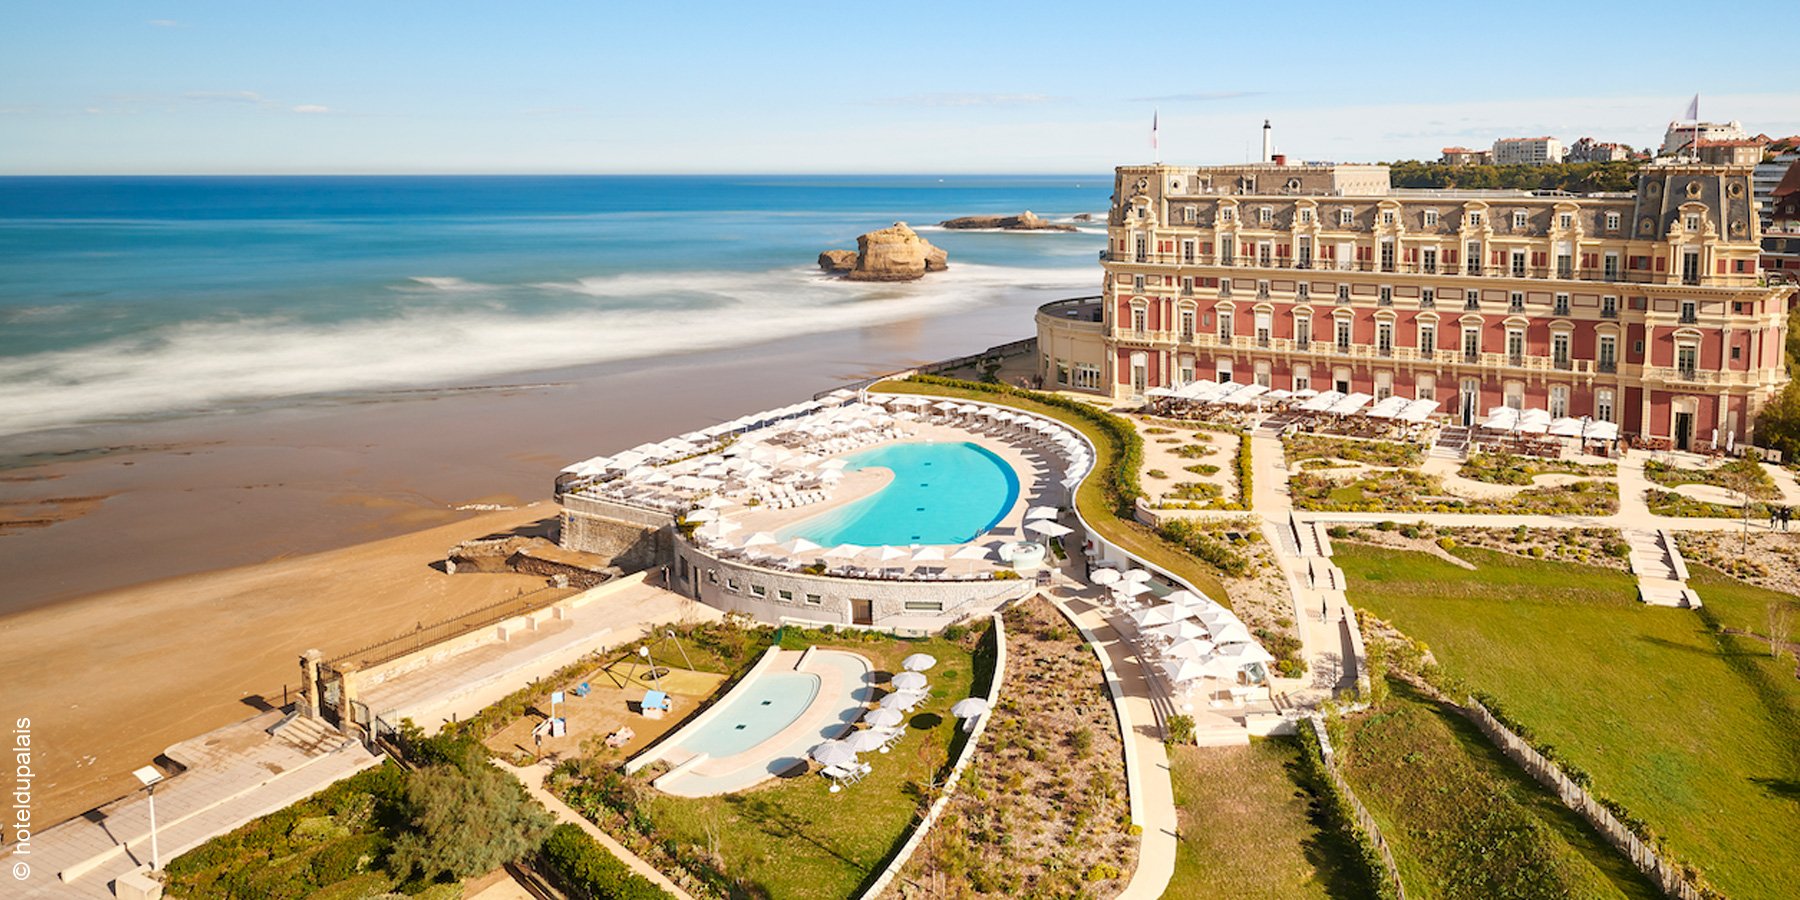 Hôtel du Palais | Biarritz | Beach Hotel | luxuszeit.com